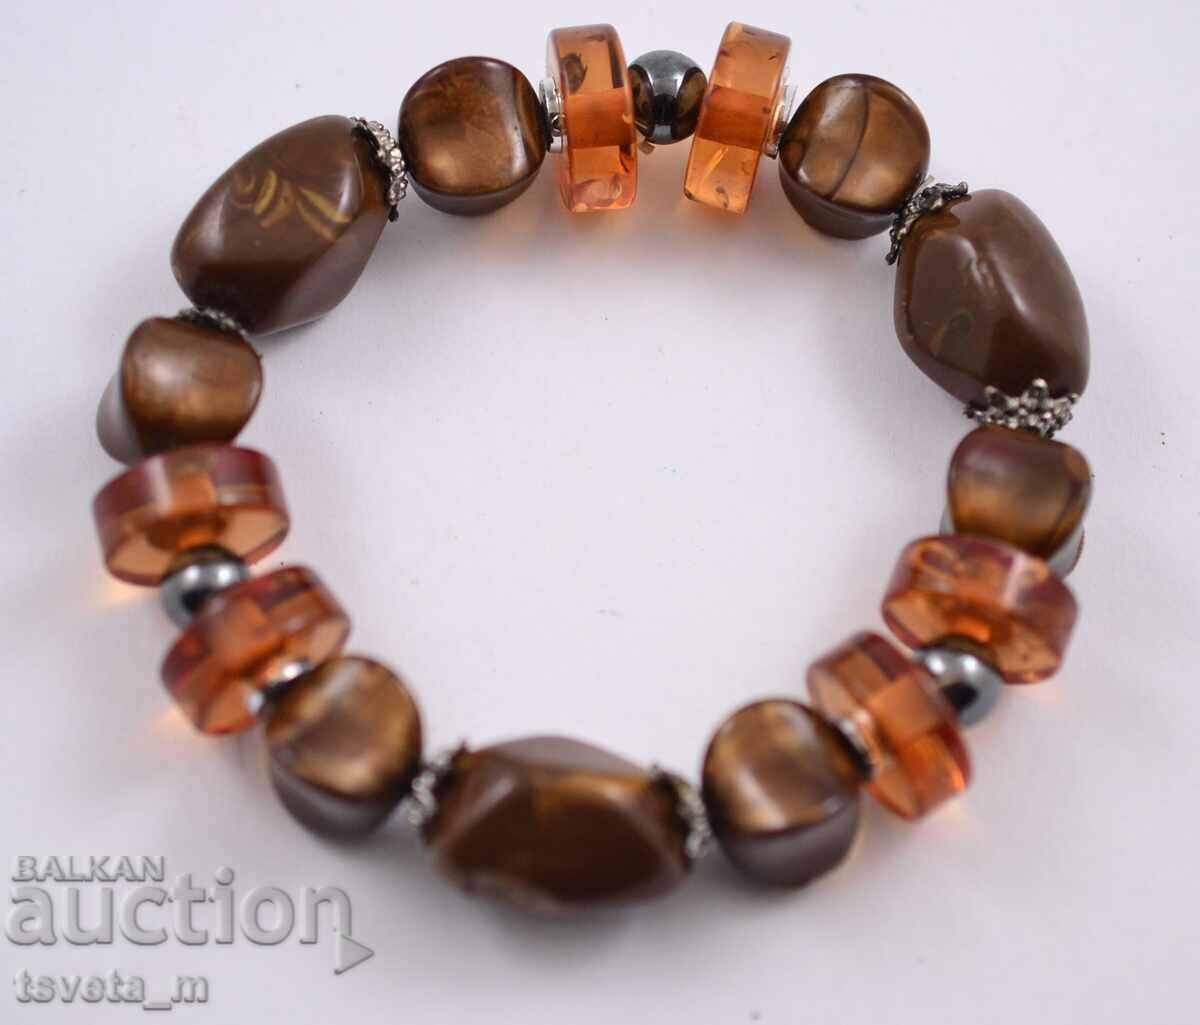 Amber rubber band bracelet